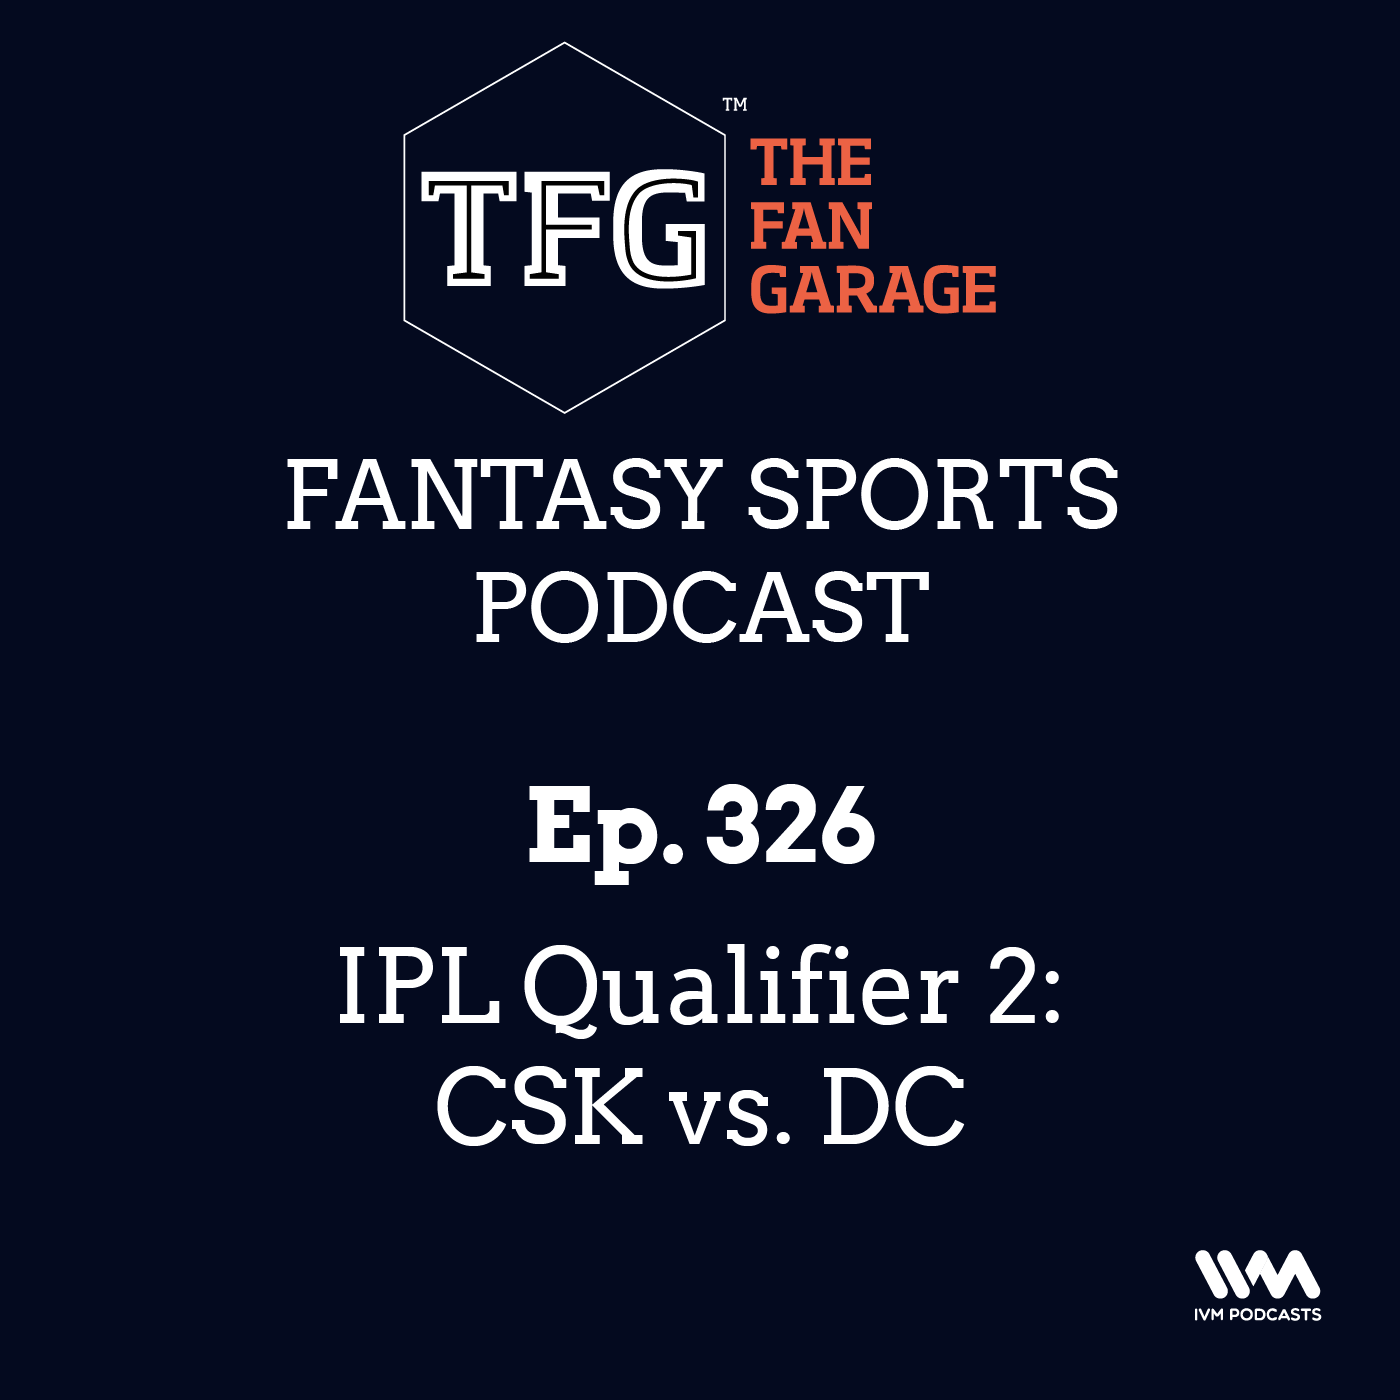 TFG Fantasy Sports Podcast Ep. 326: IPL Qualifier 2: CSK vs. DC